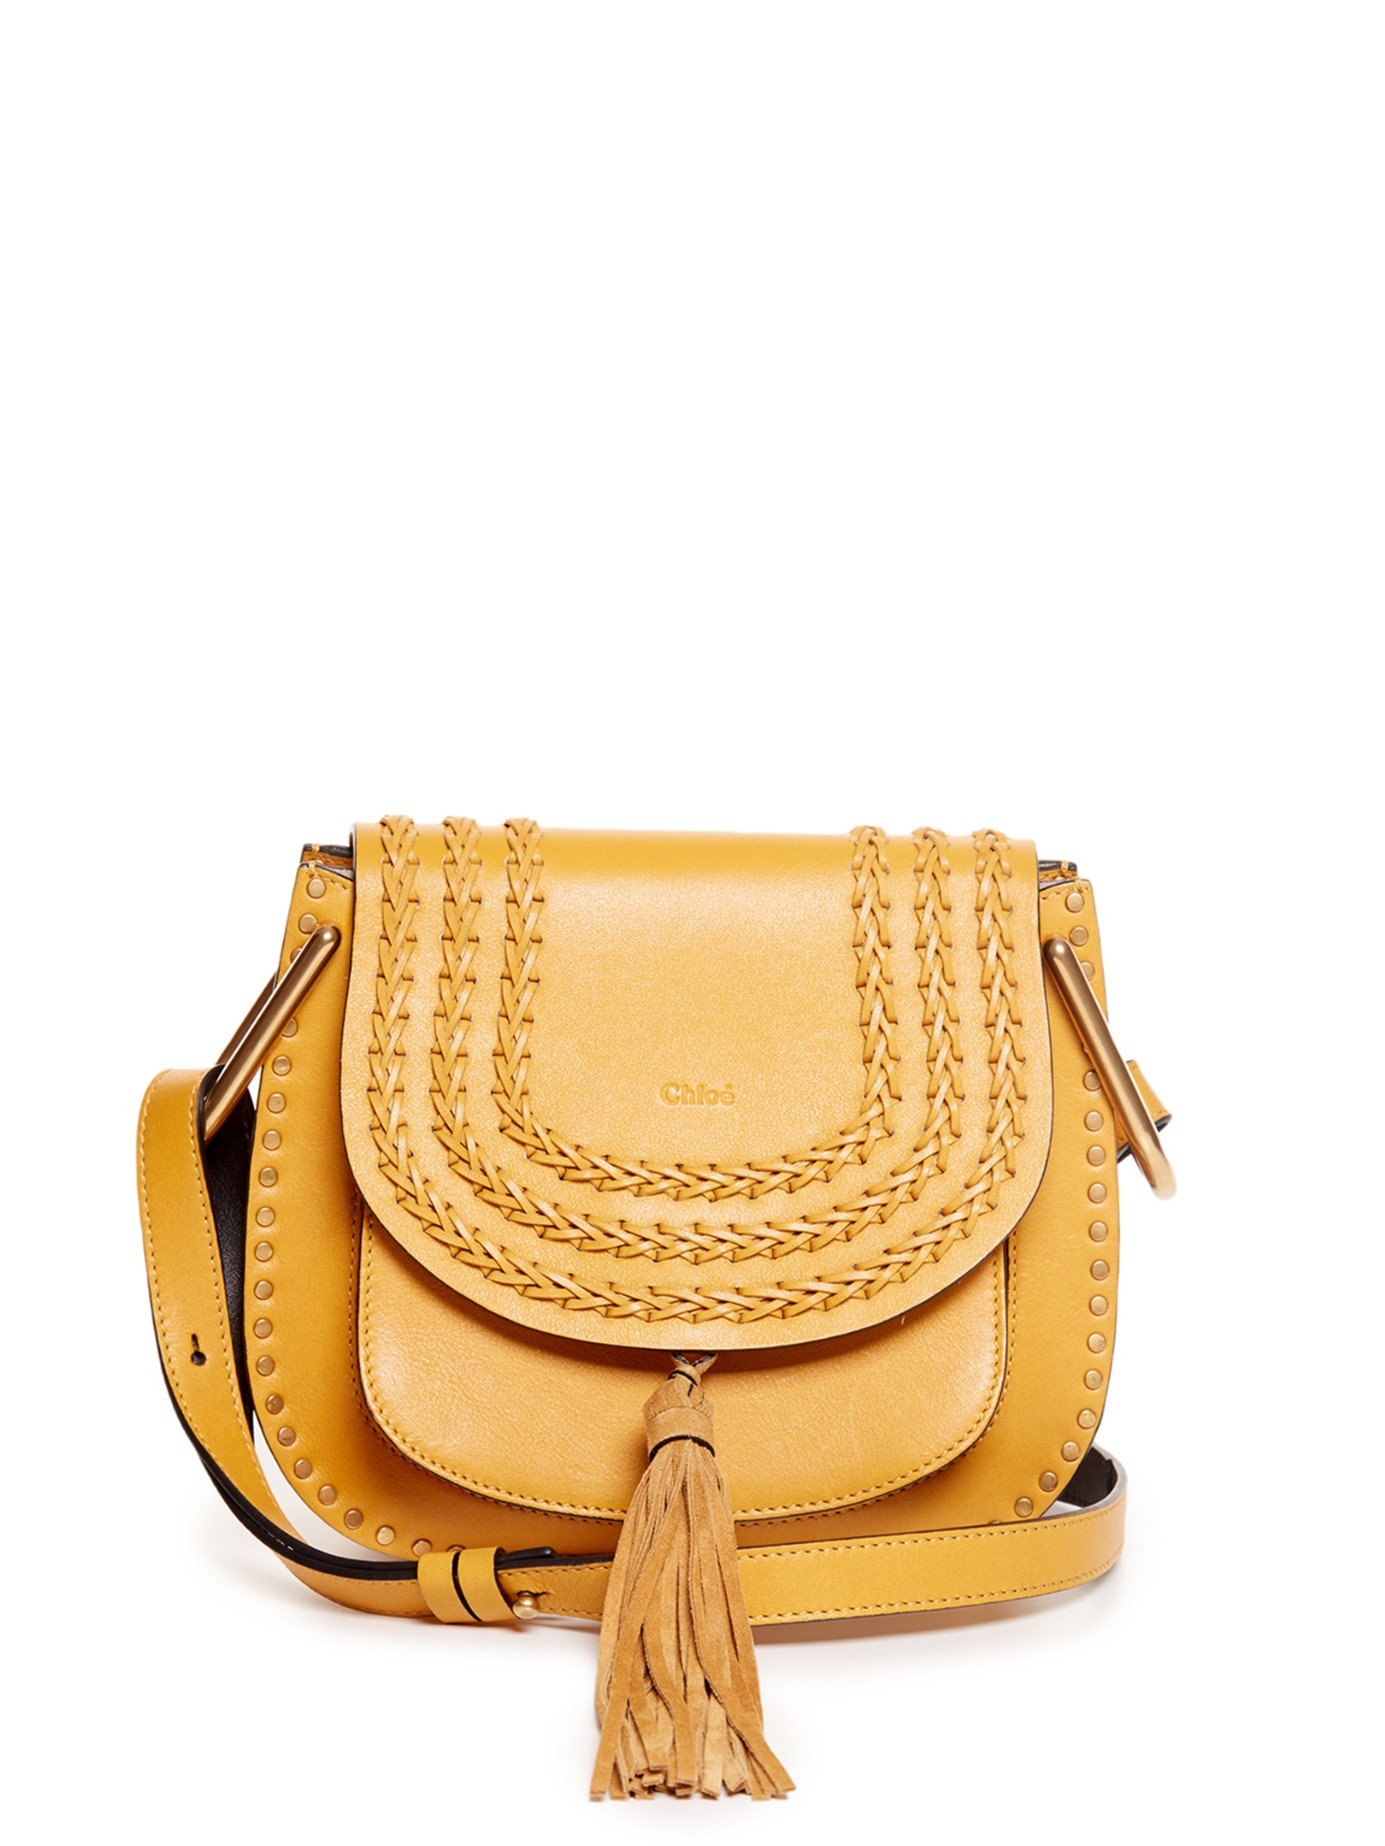 replica bags chloe - Chlo Hudson Small Leather Cross-Body Bag in Yellow | Lyst